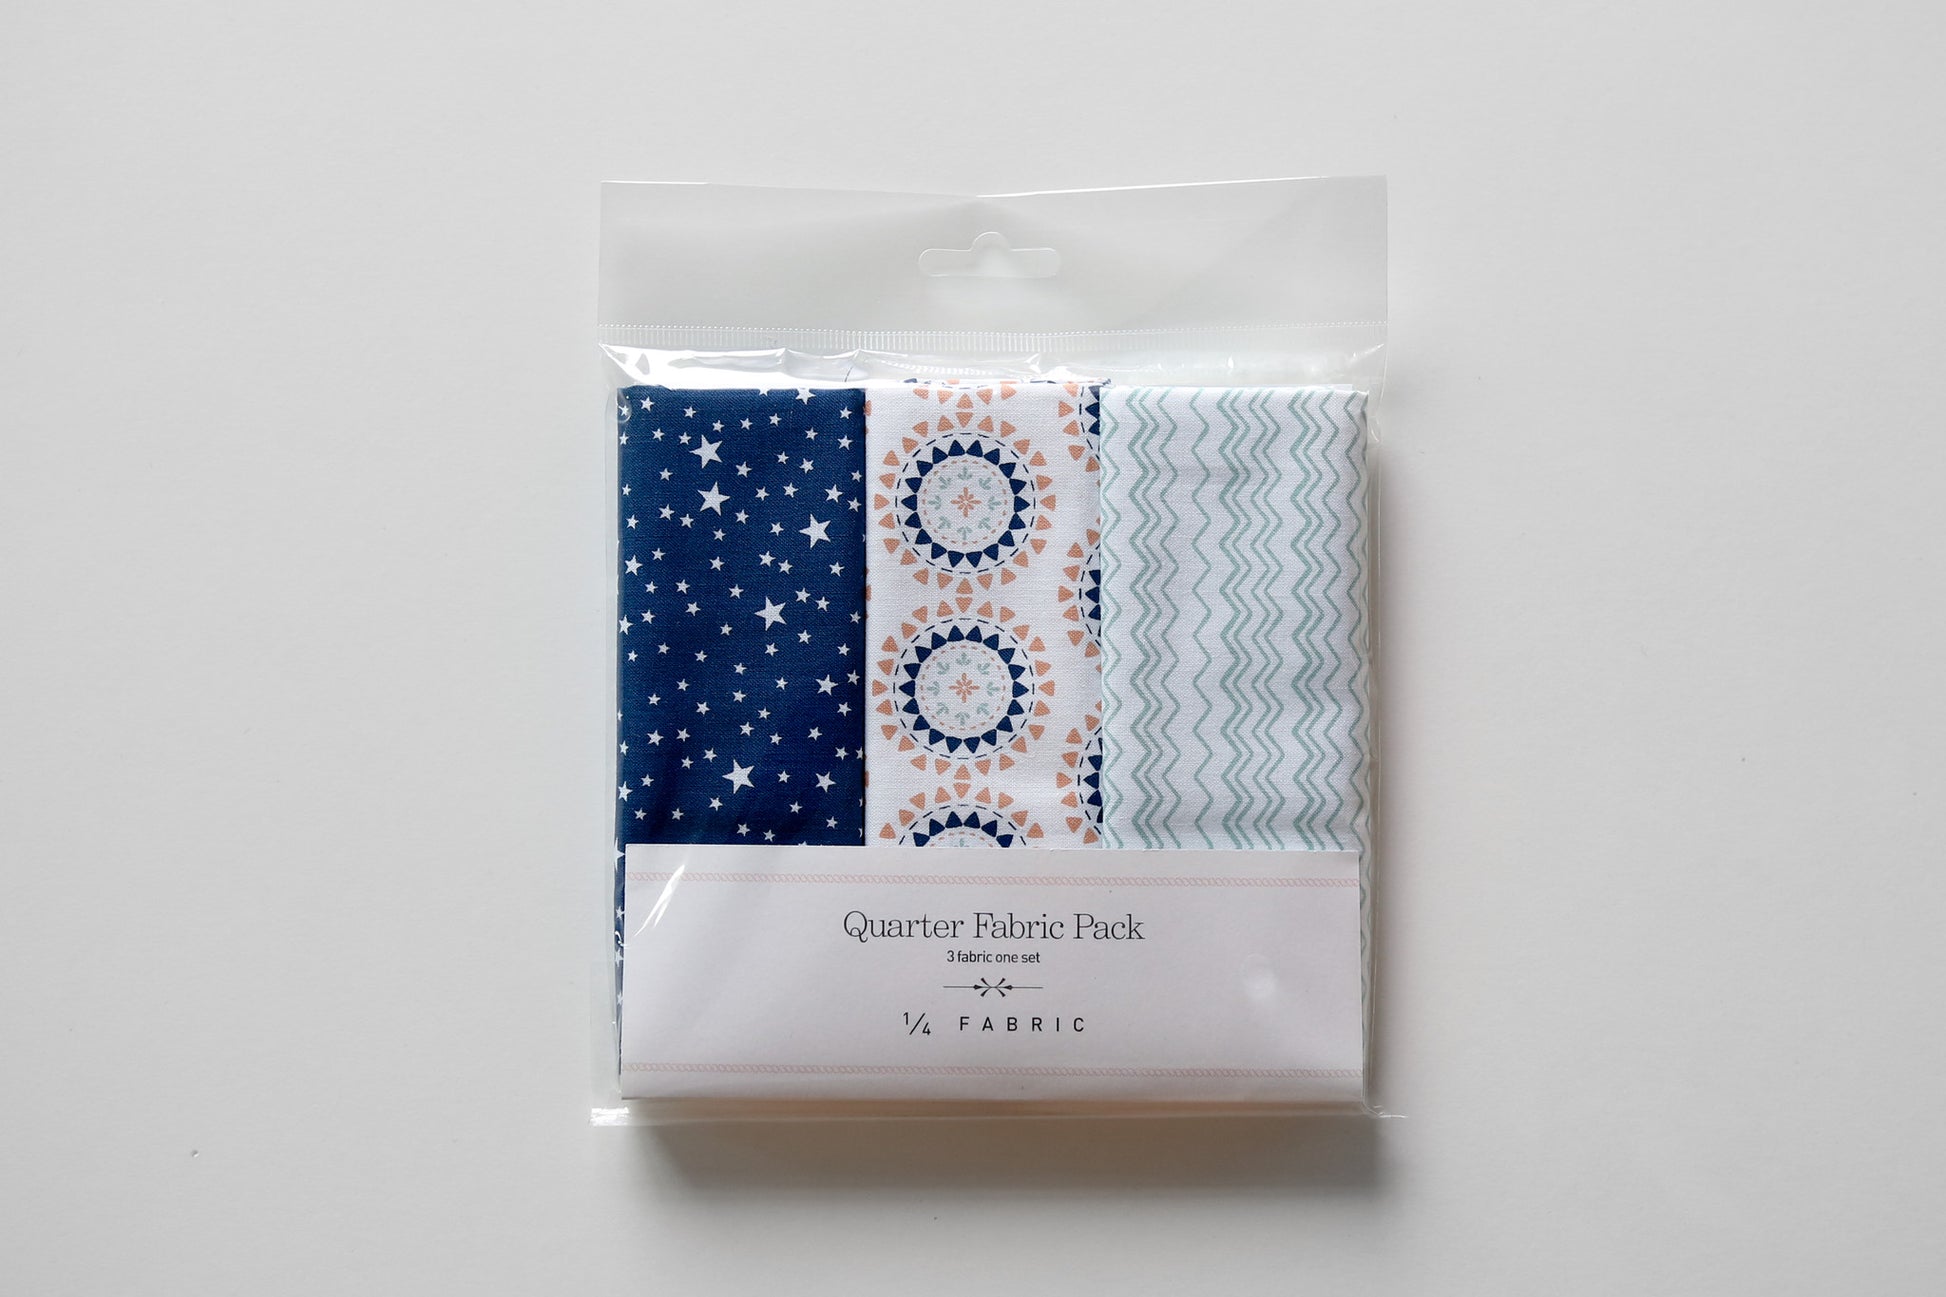 Quarter Fabric Pack - Cotton, Dailylike "Camping" - KEY Handmade
 - 5